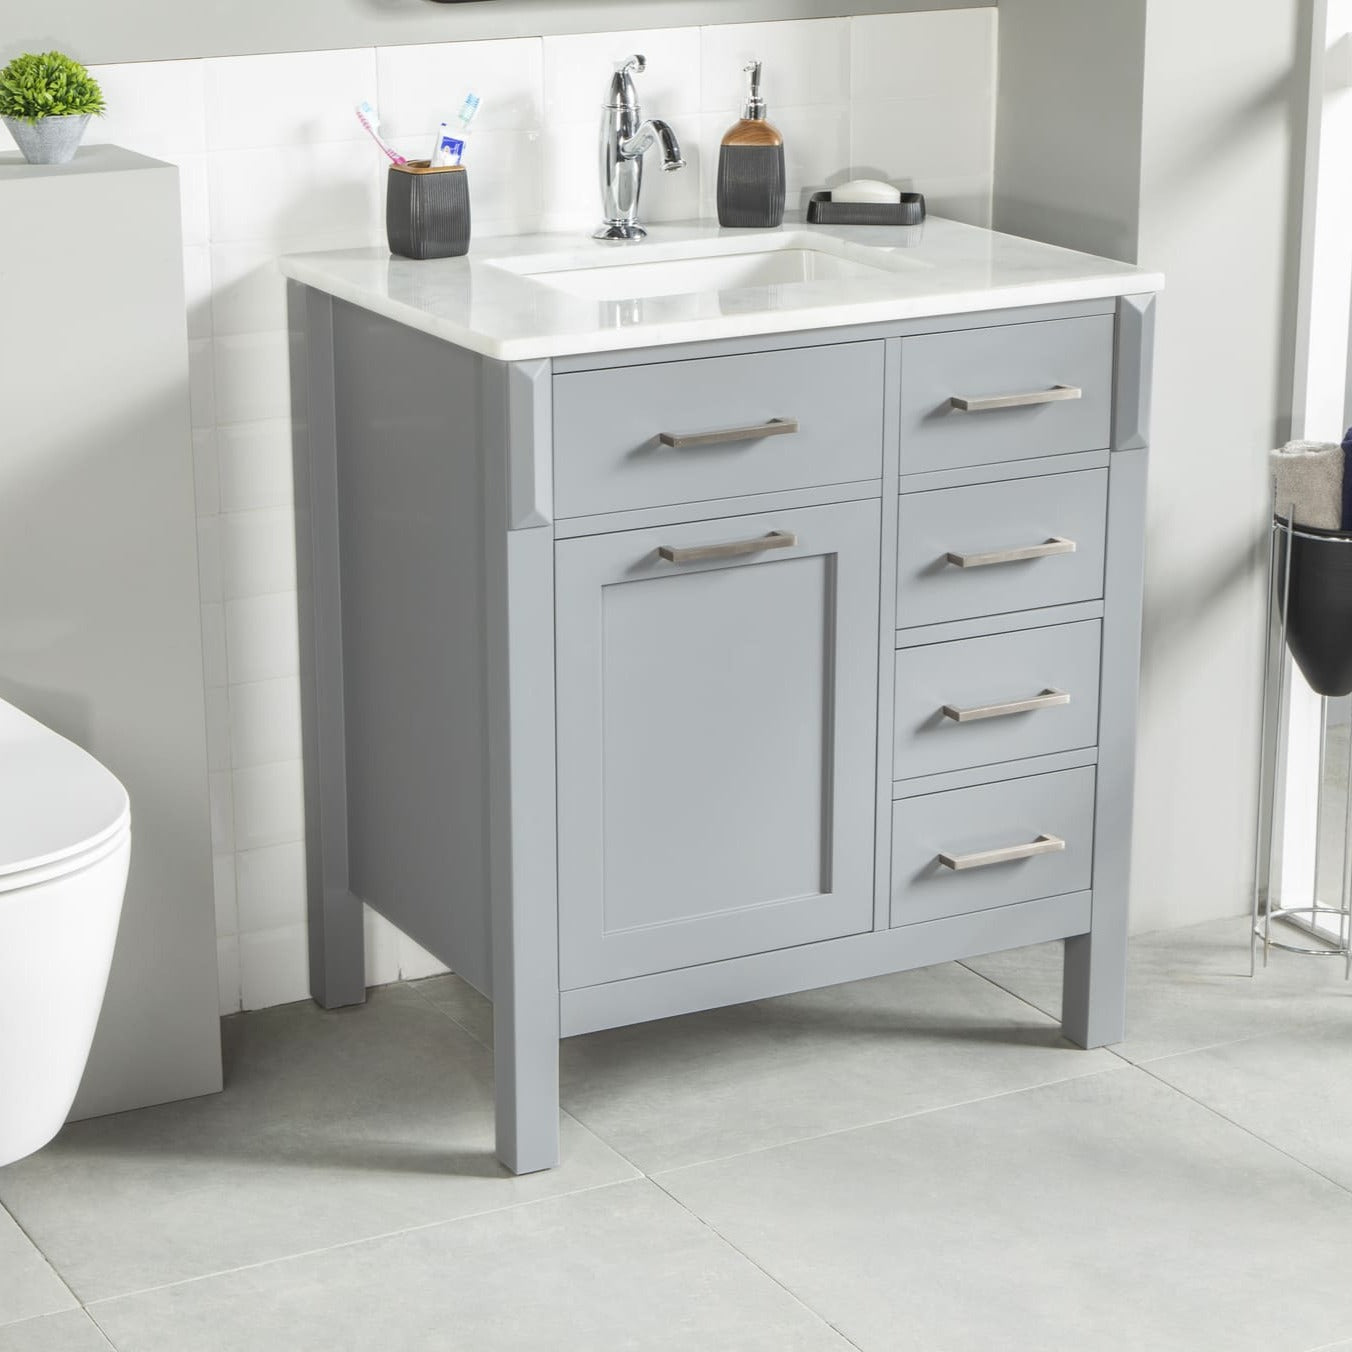 Fawna Bathroom Vanity Homelero 30"  #size_30"  #color_grey  #hardware_brushed nickel